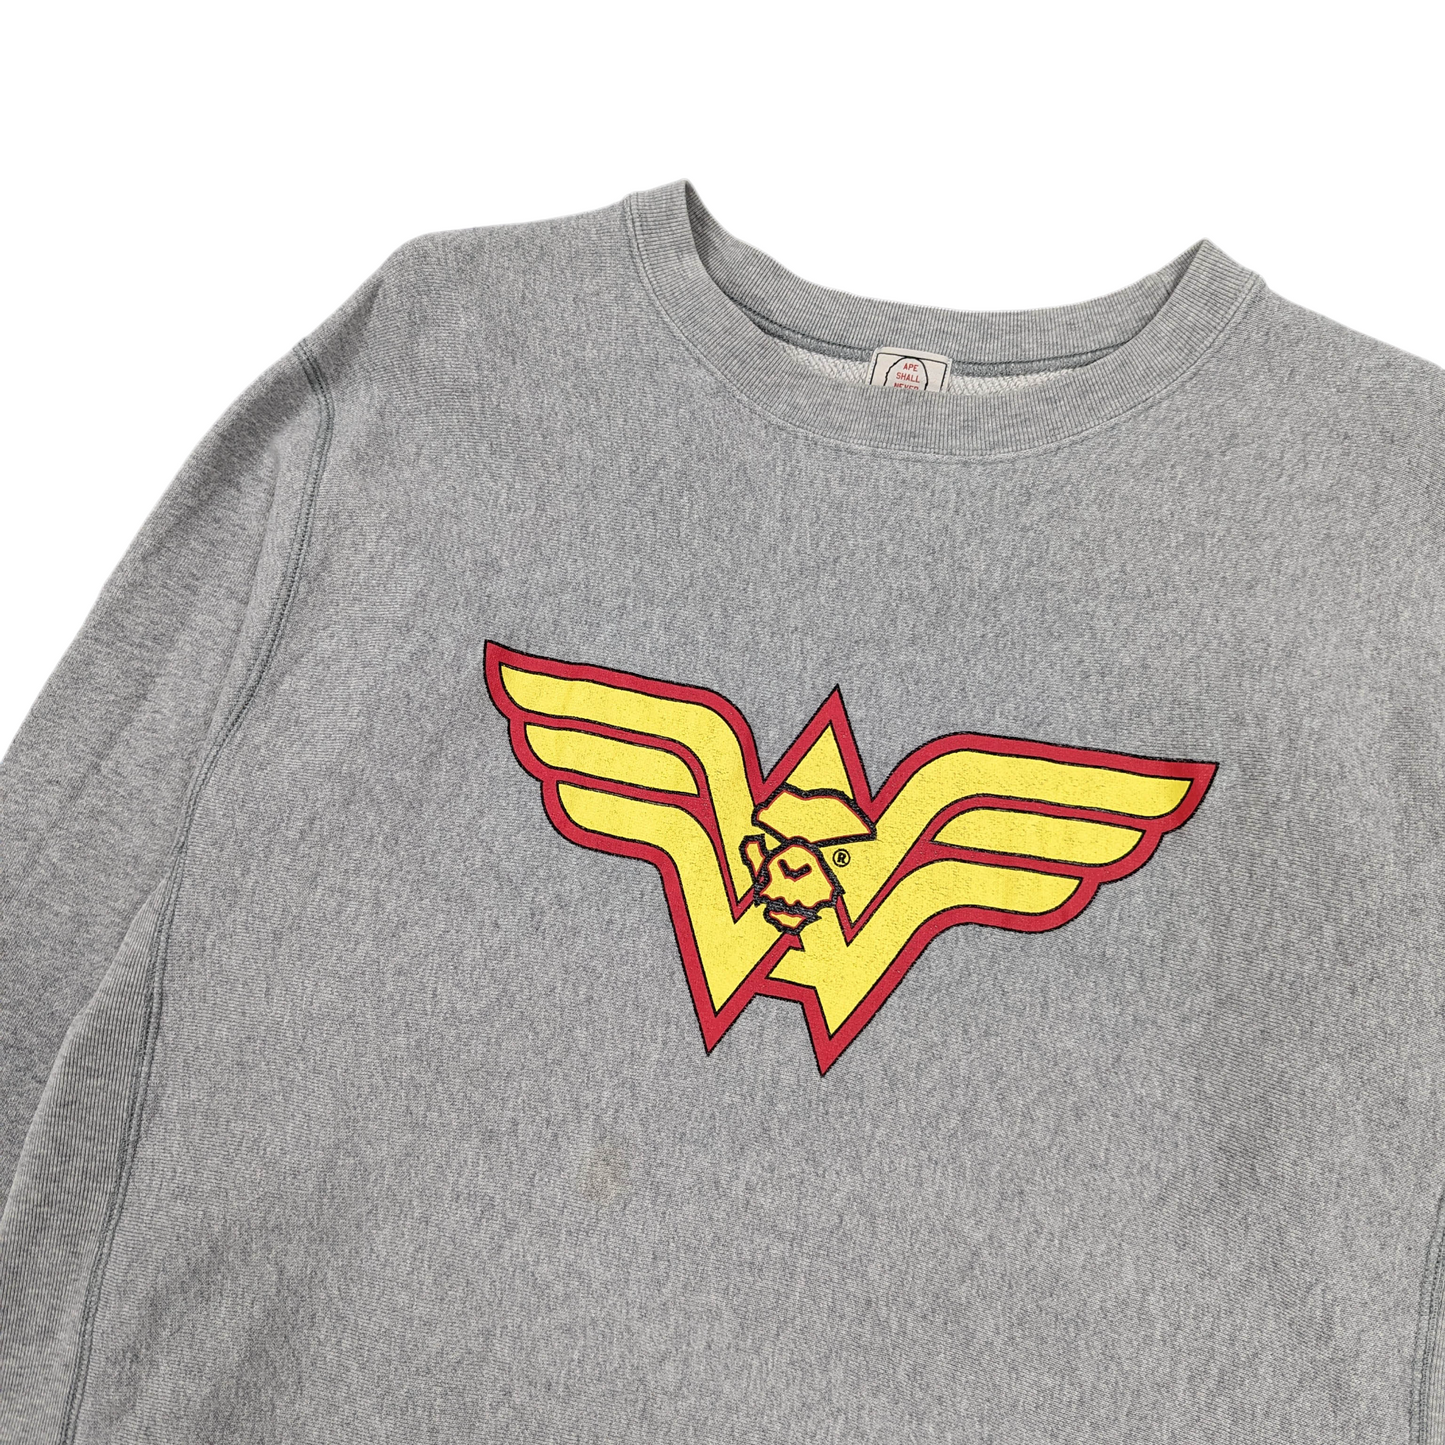 Vintage BAPE Wonder Woman Sweatshirt Size M